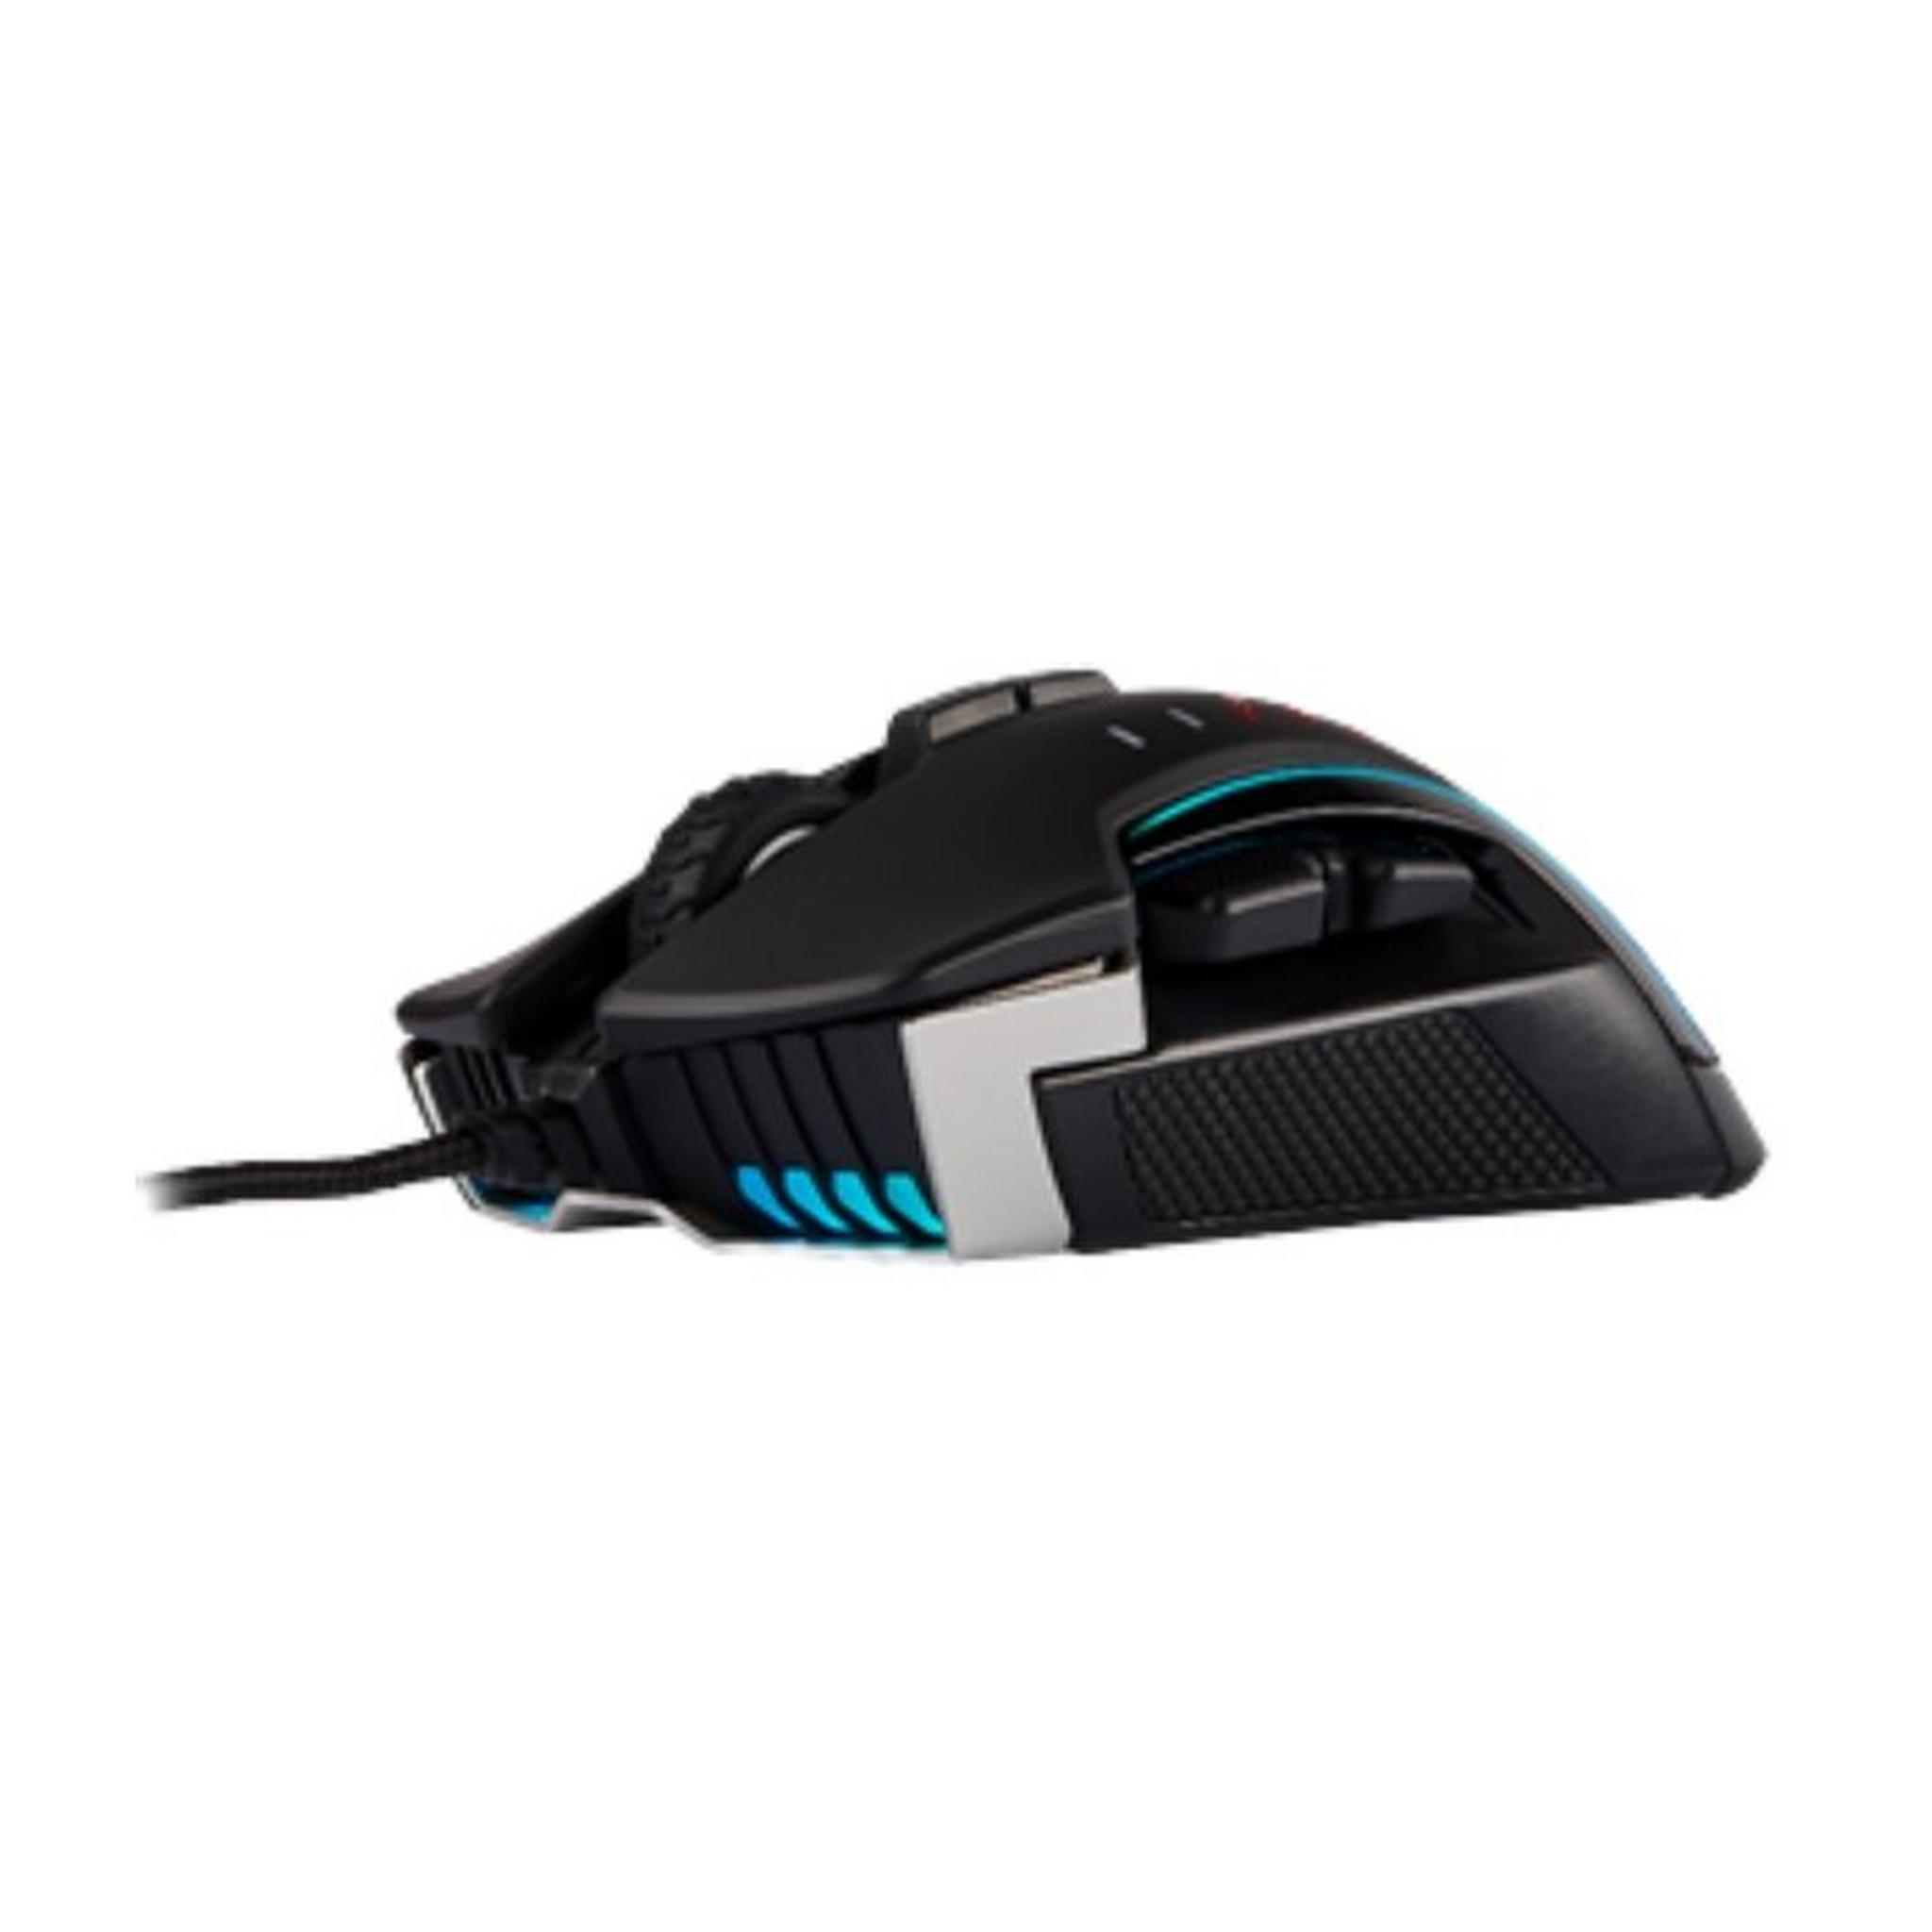 Corsair Glaive RGB Pro Gaming Mouse - Aluminum